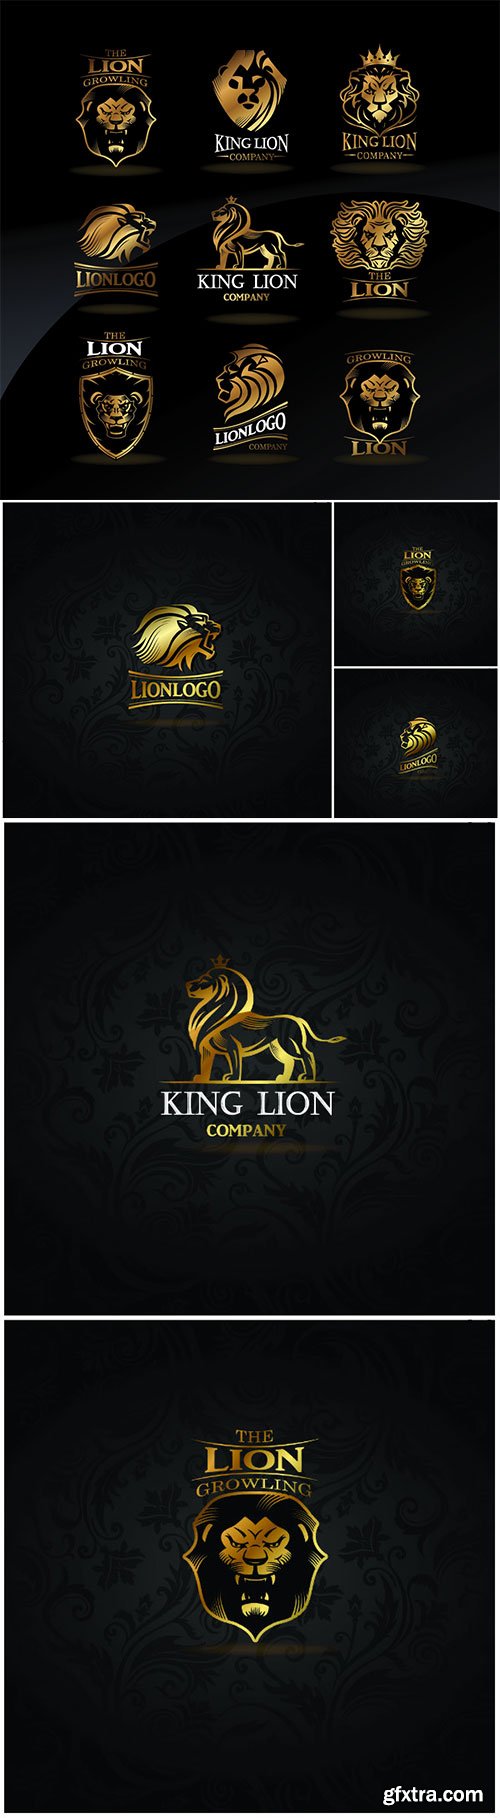 Emblems with golden Lions